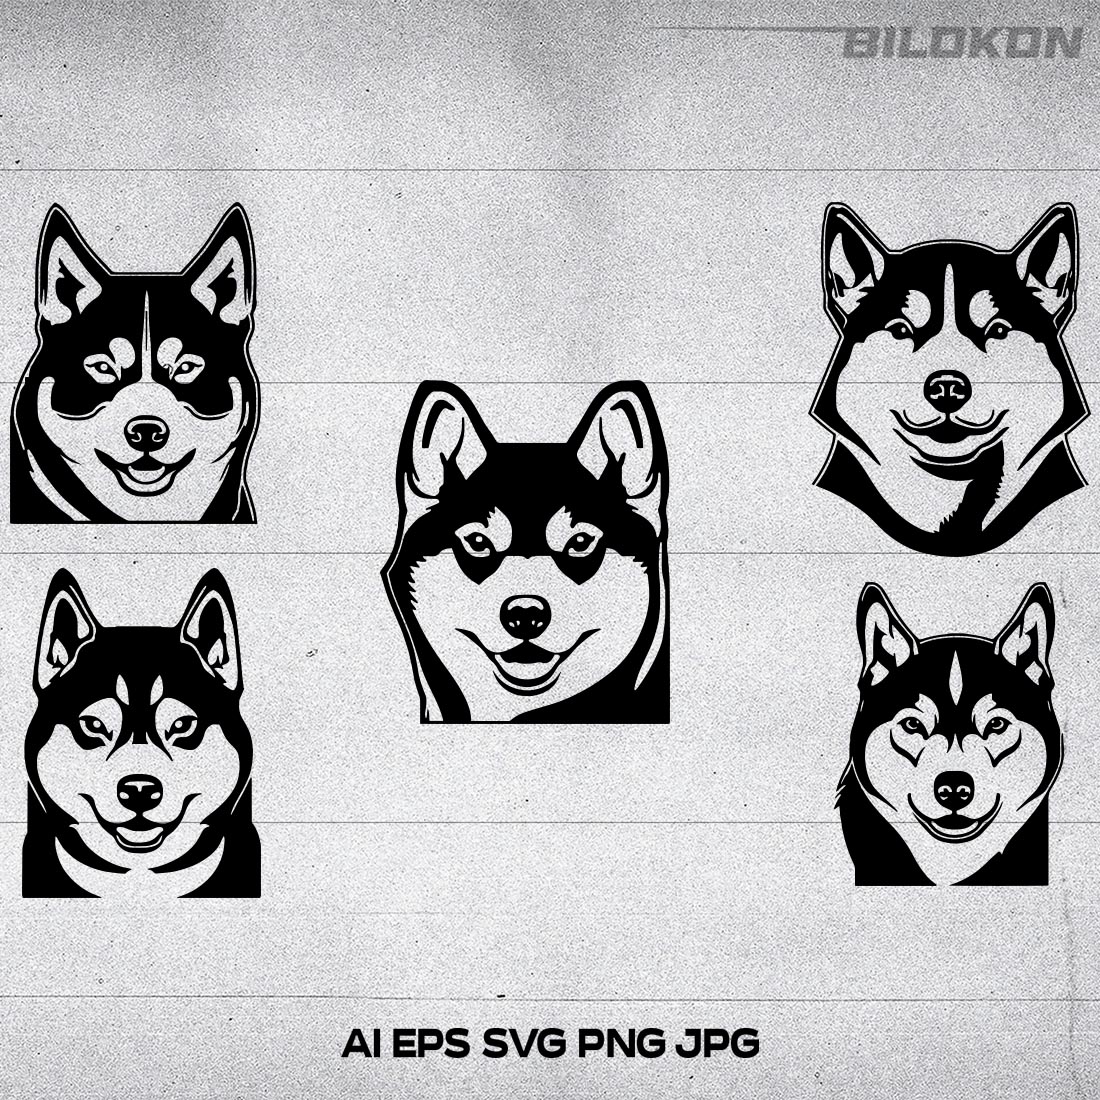 Shiba Inu dog face, SVG, Vector, Illustration cover image.